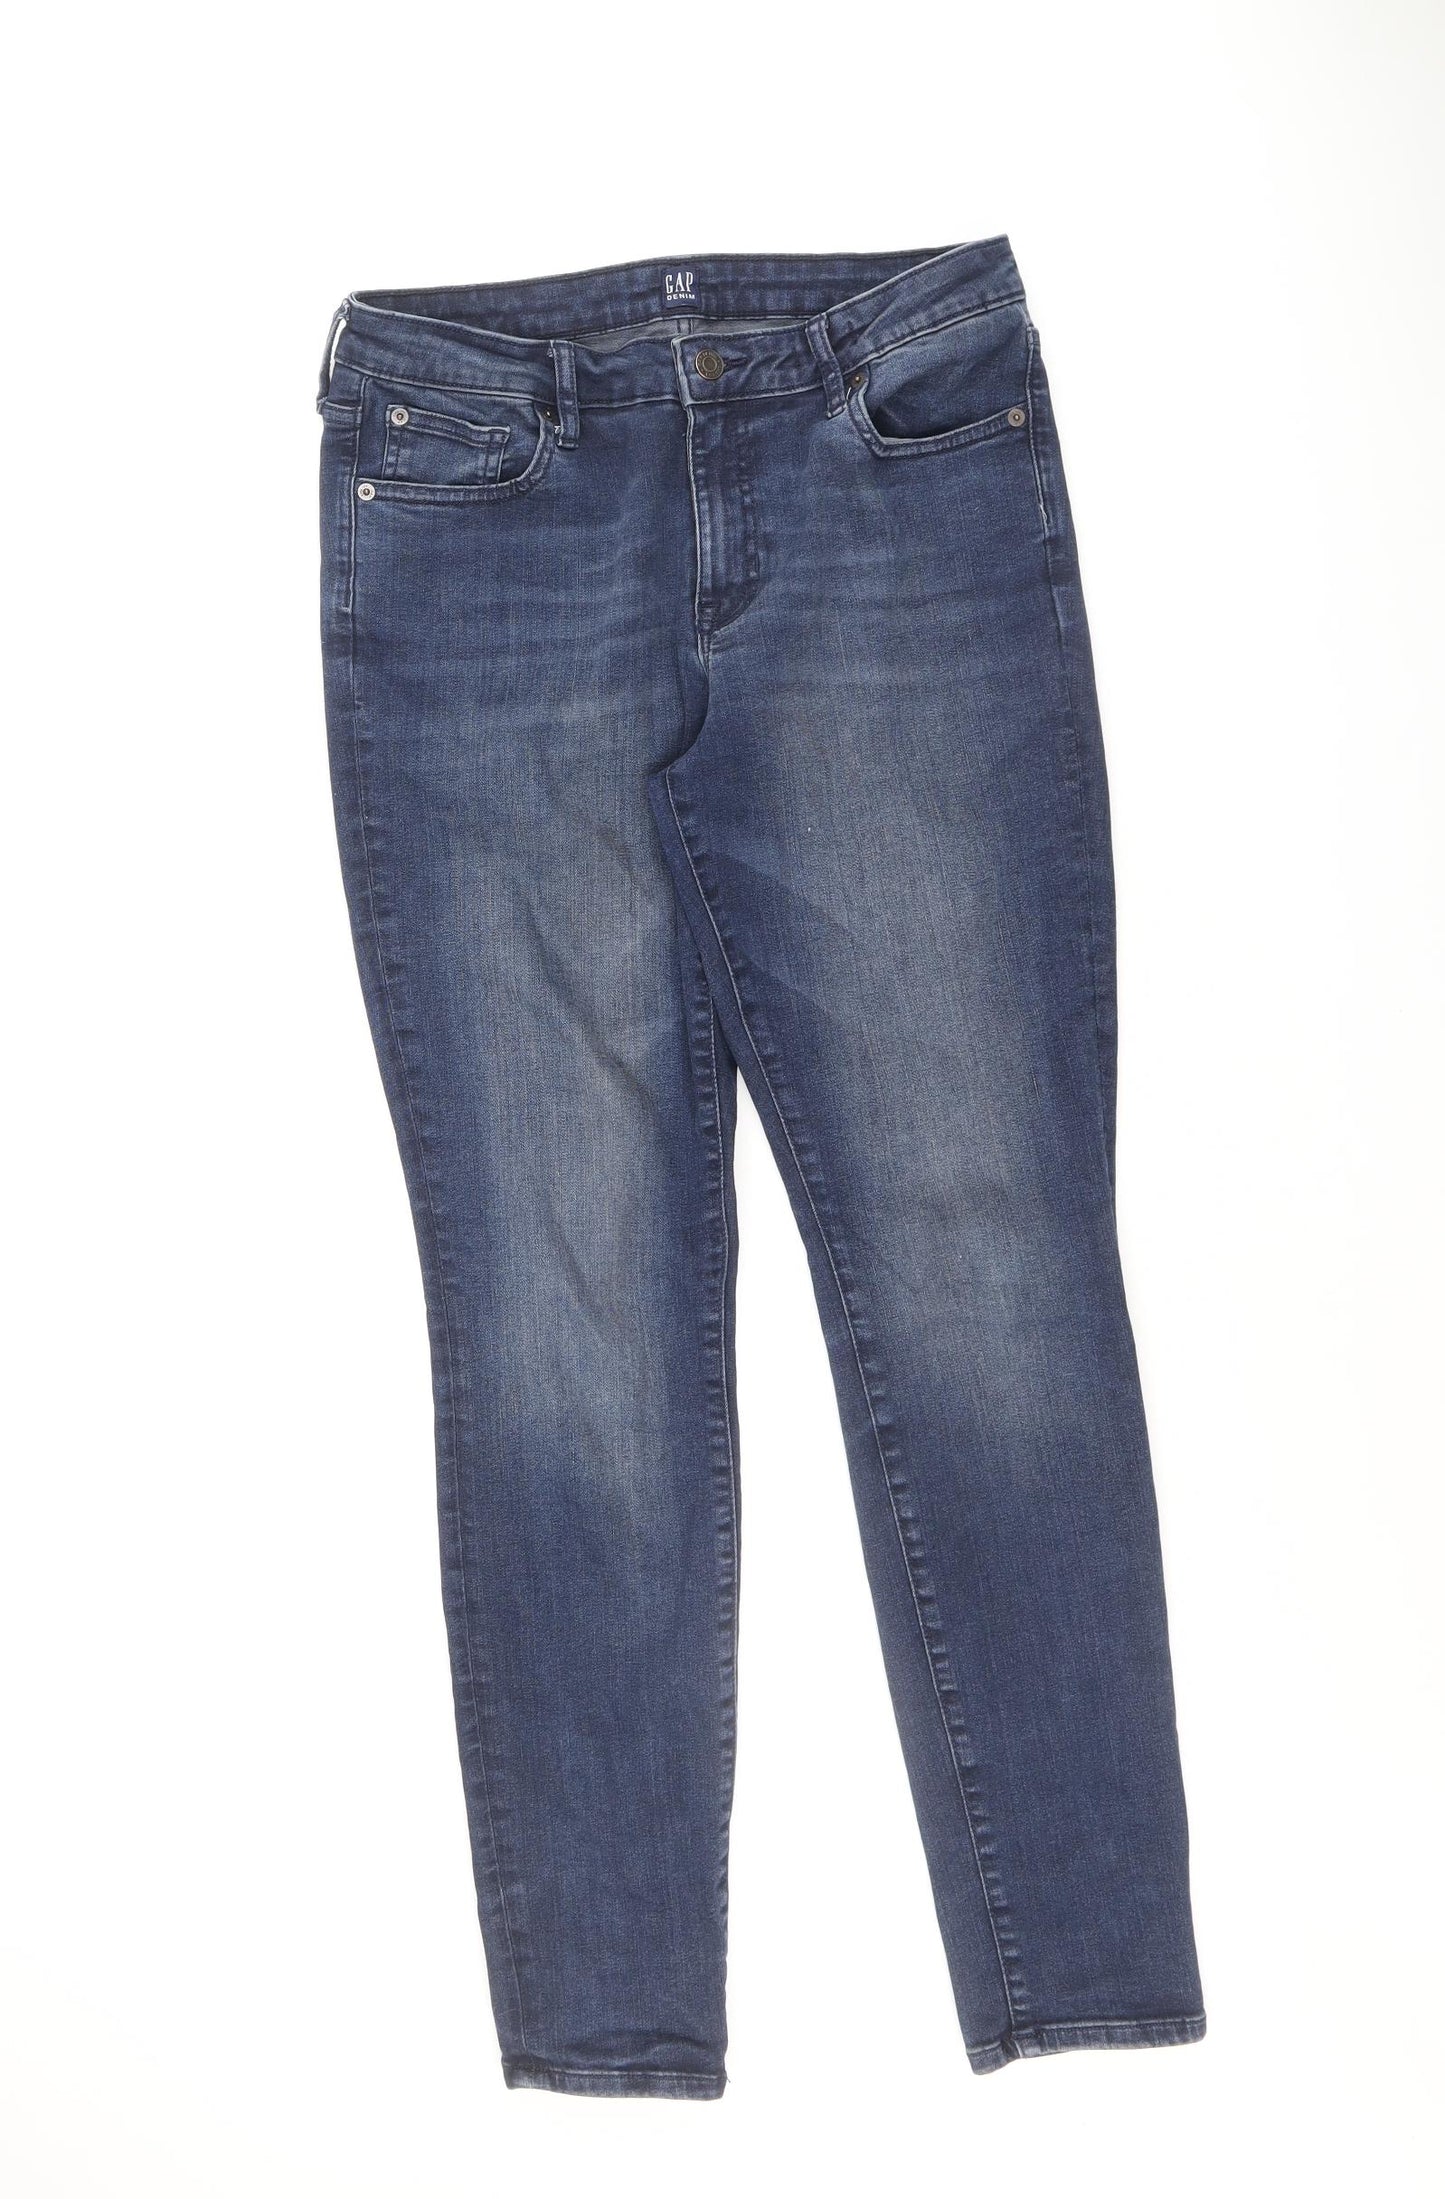 Gap Womens Blue Herringbone Cotton Skinny Jeans Size 30 in L29 in Regular Zip